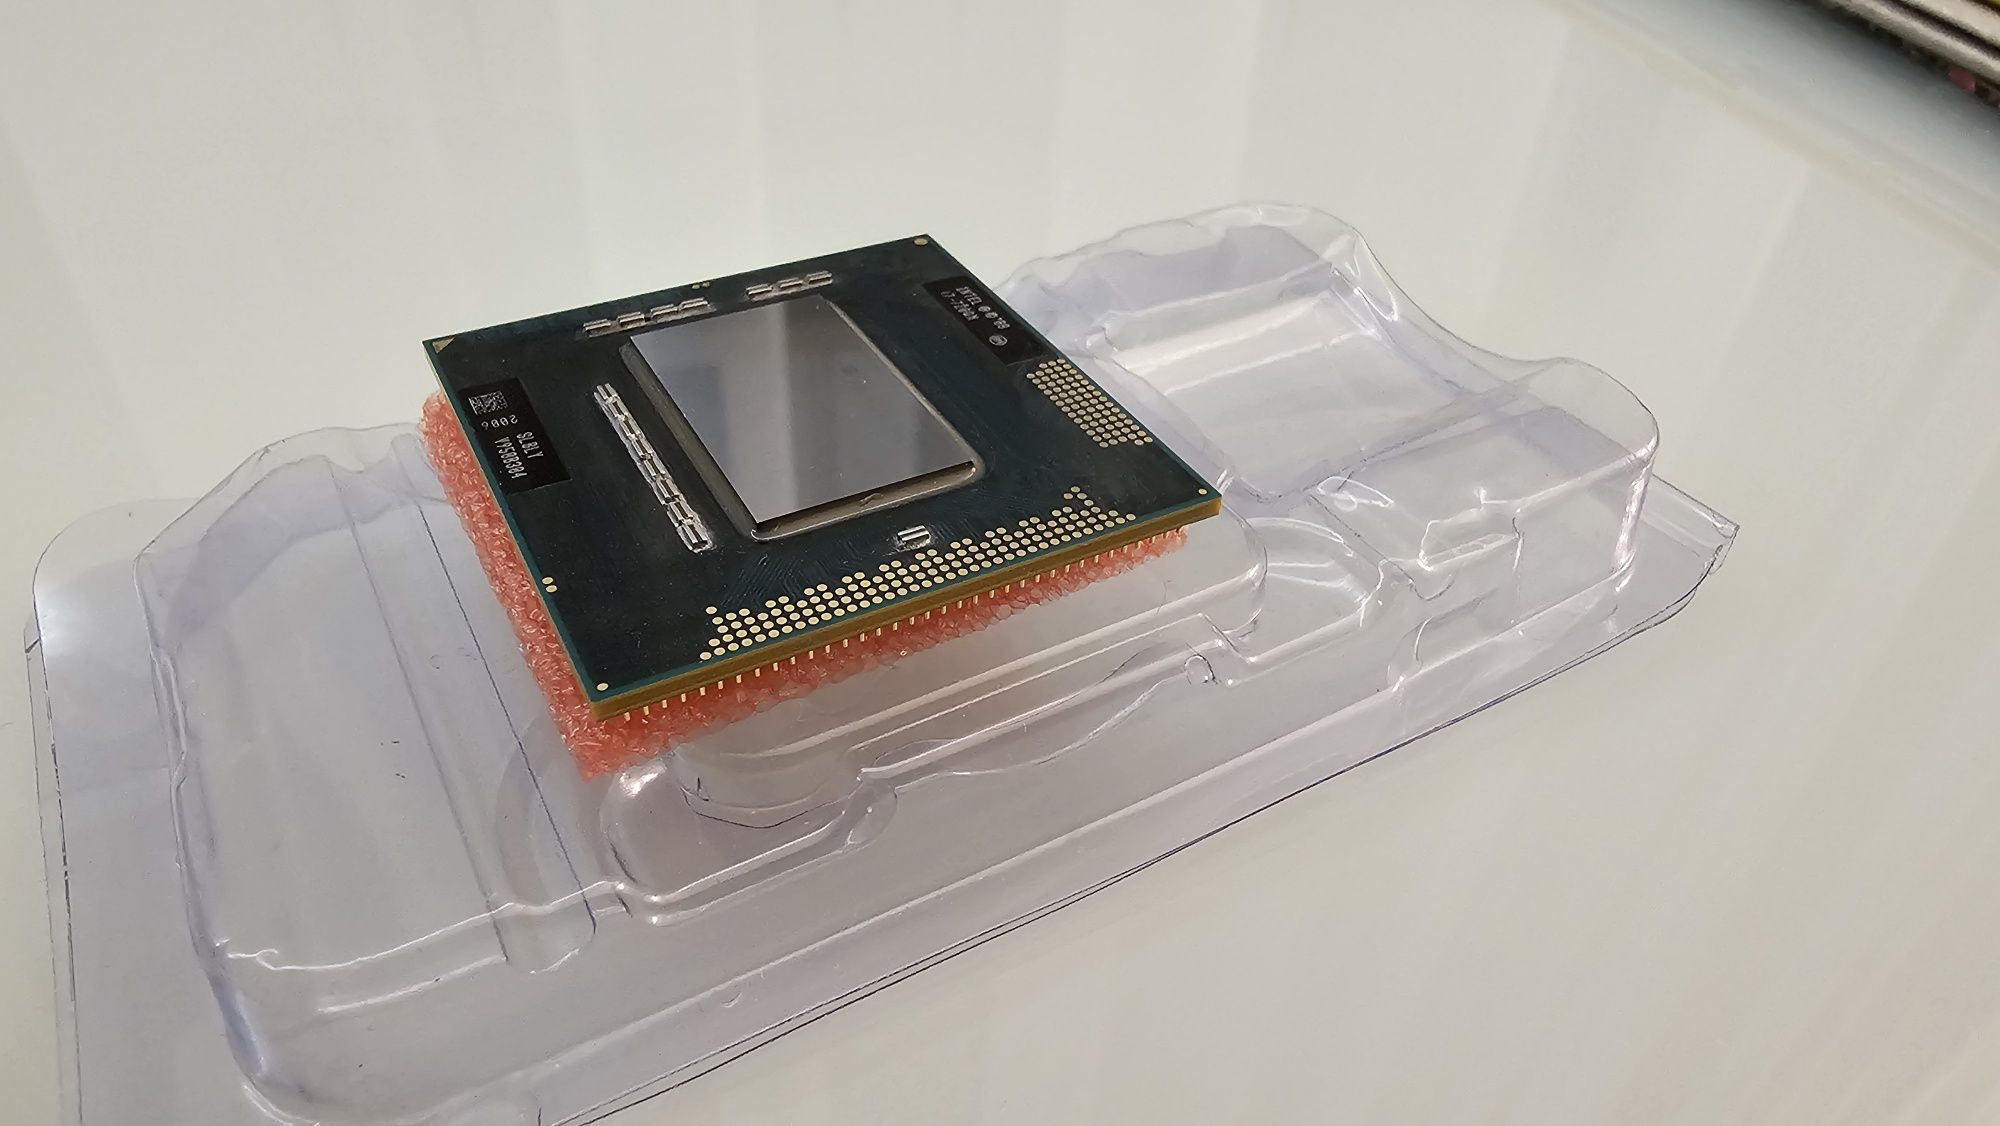 Procesor Intel I7 740QM